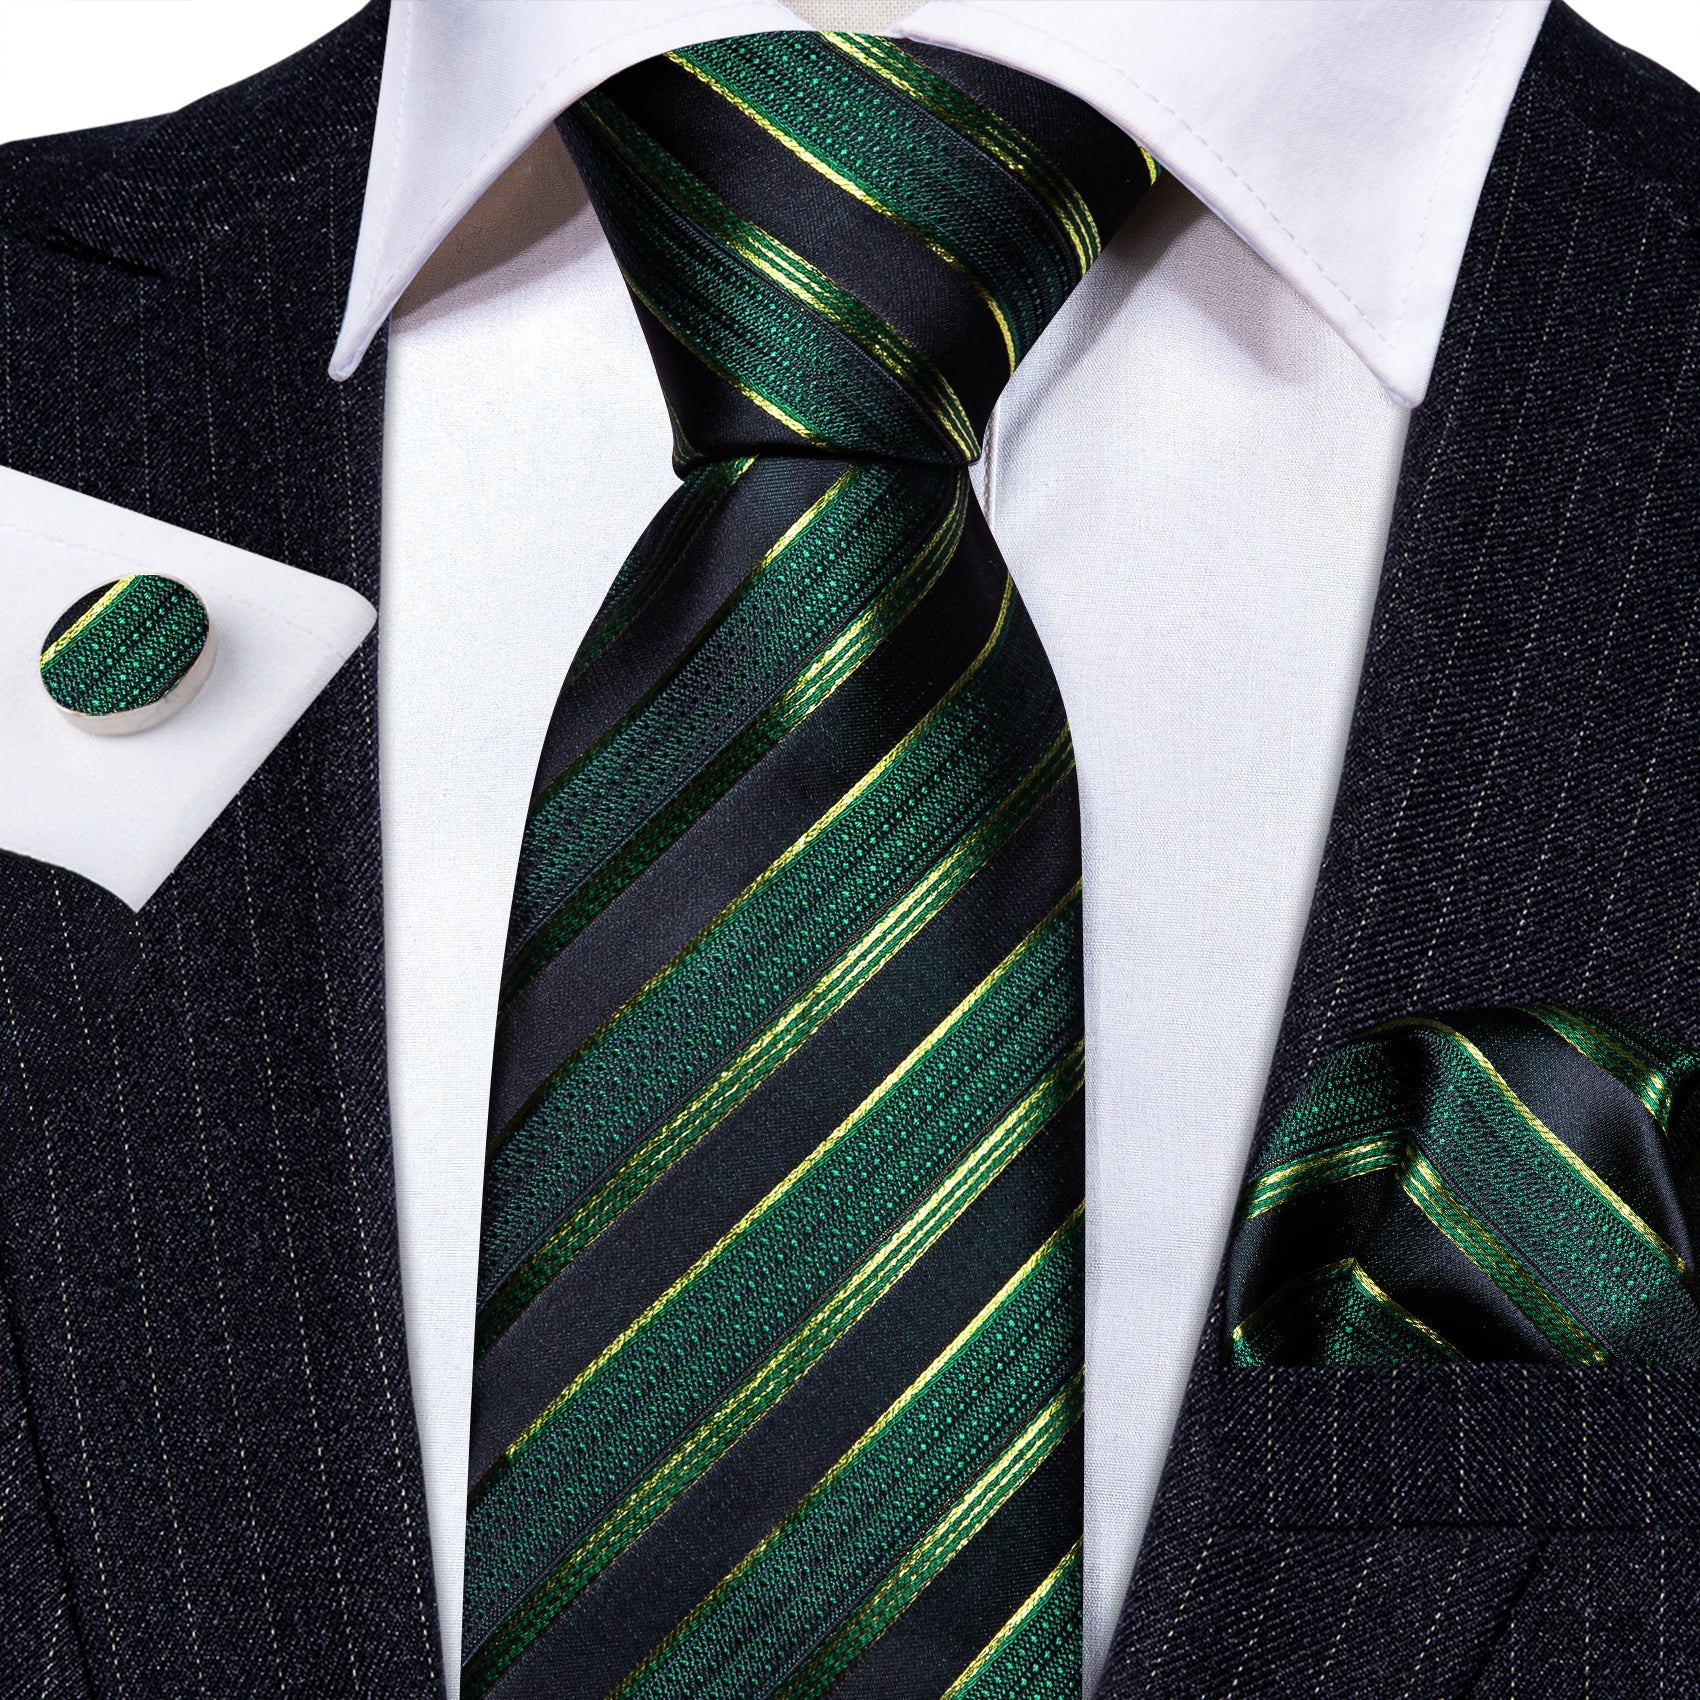 Barry Wang Light Green Necktie Black Striped Silk Tie Set for Wedding 